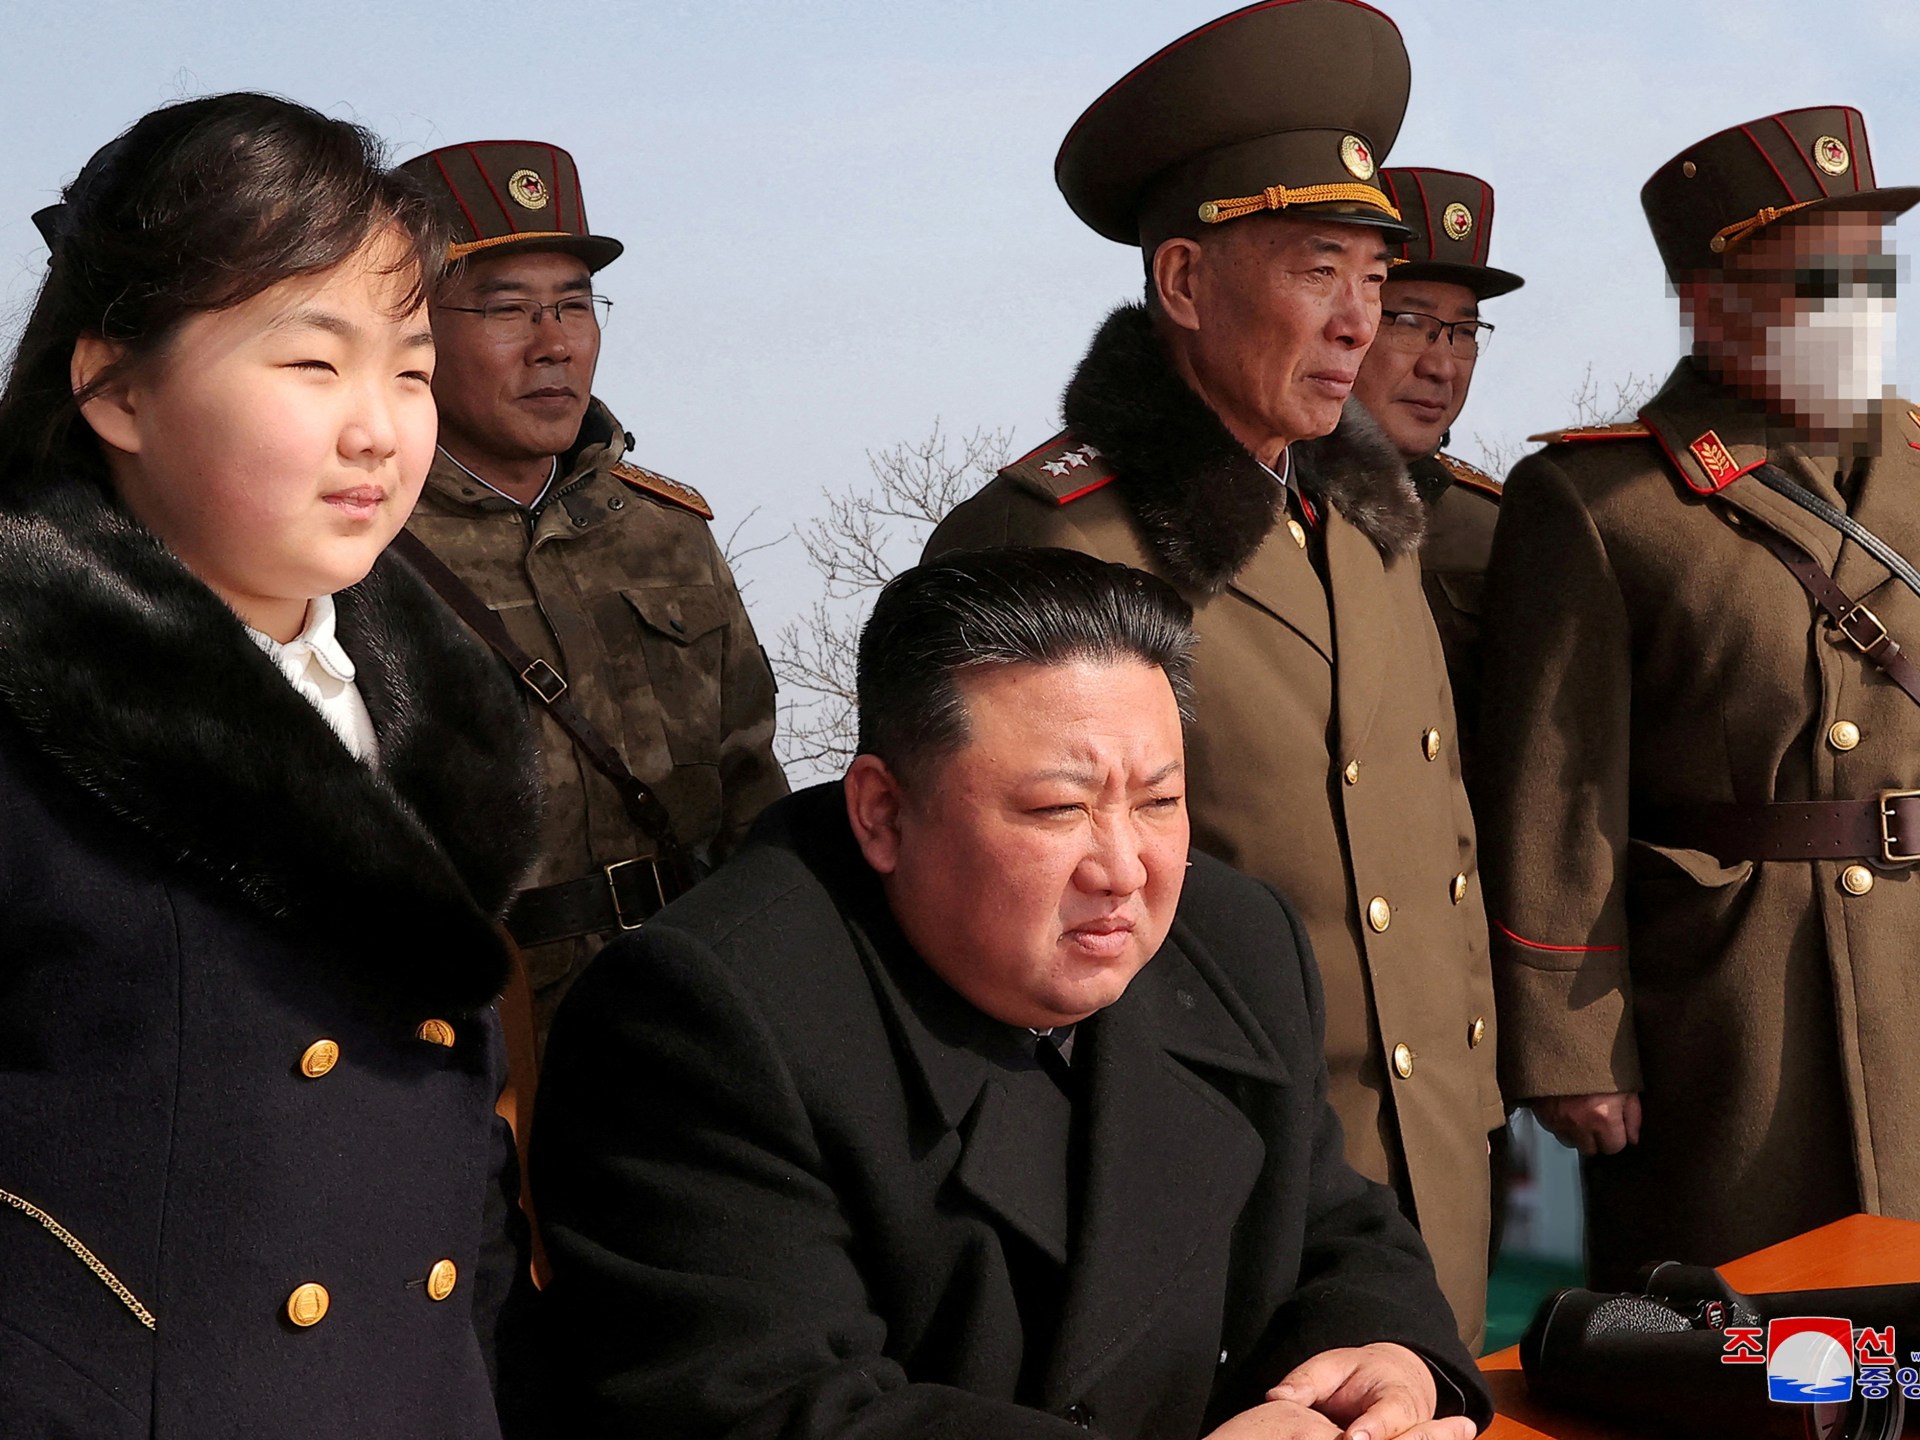 ‘Api perang nuklir’: Korea Utara peringatkan latihan militer |  Berita Politik